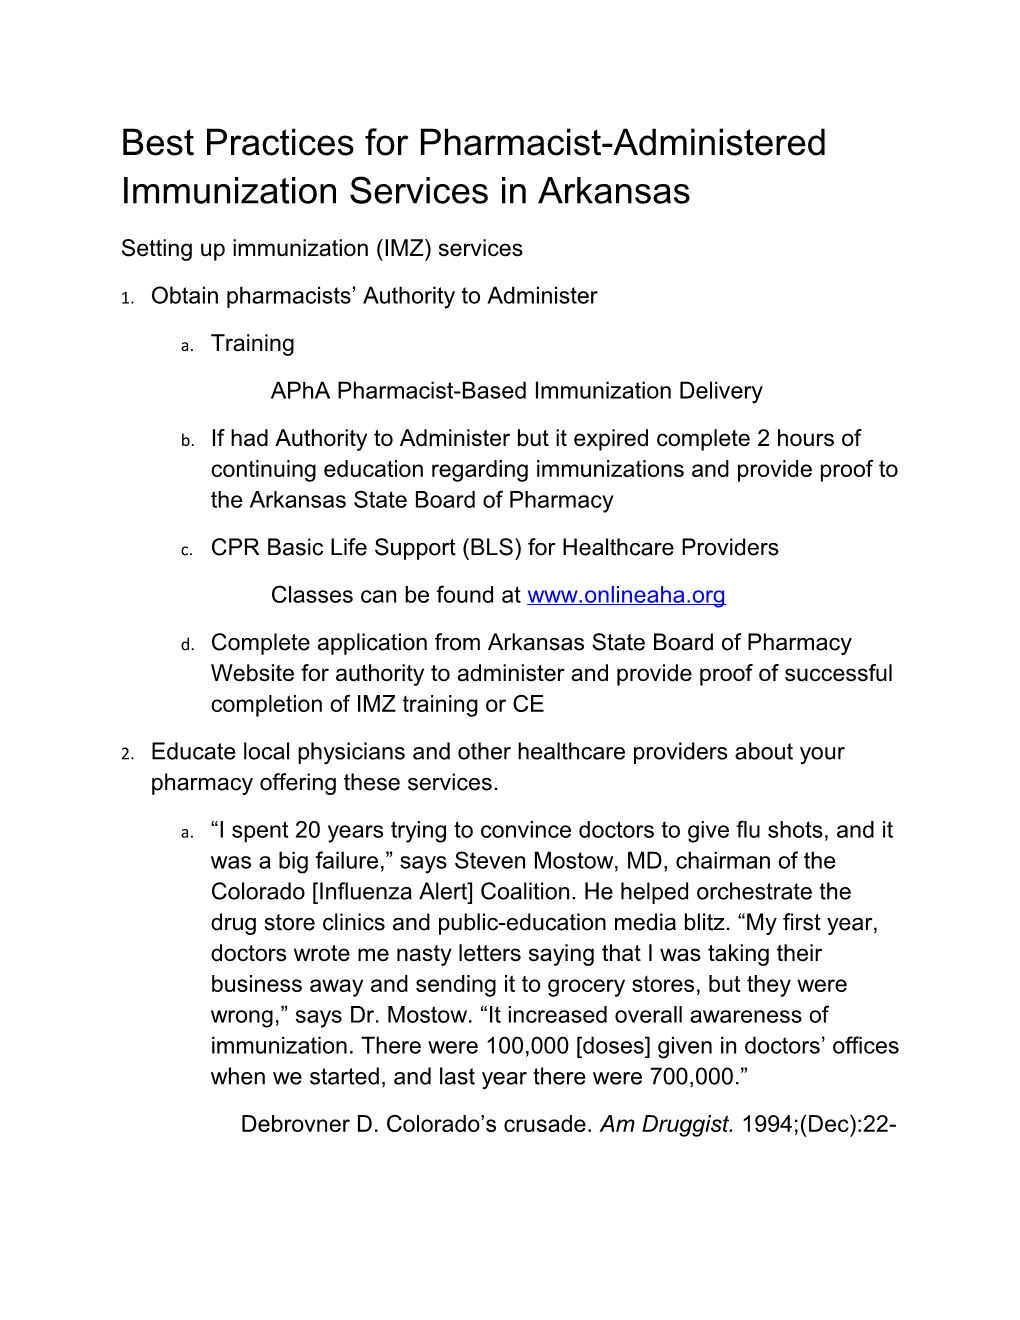 Best Practices for Pharmacist-Administered Immunization Services in Arkansas